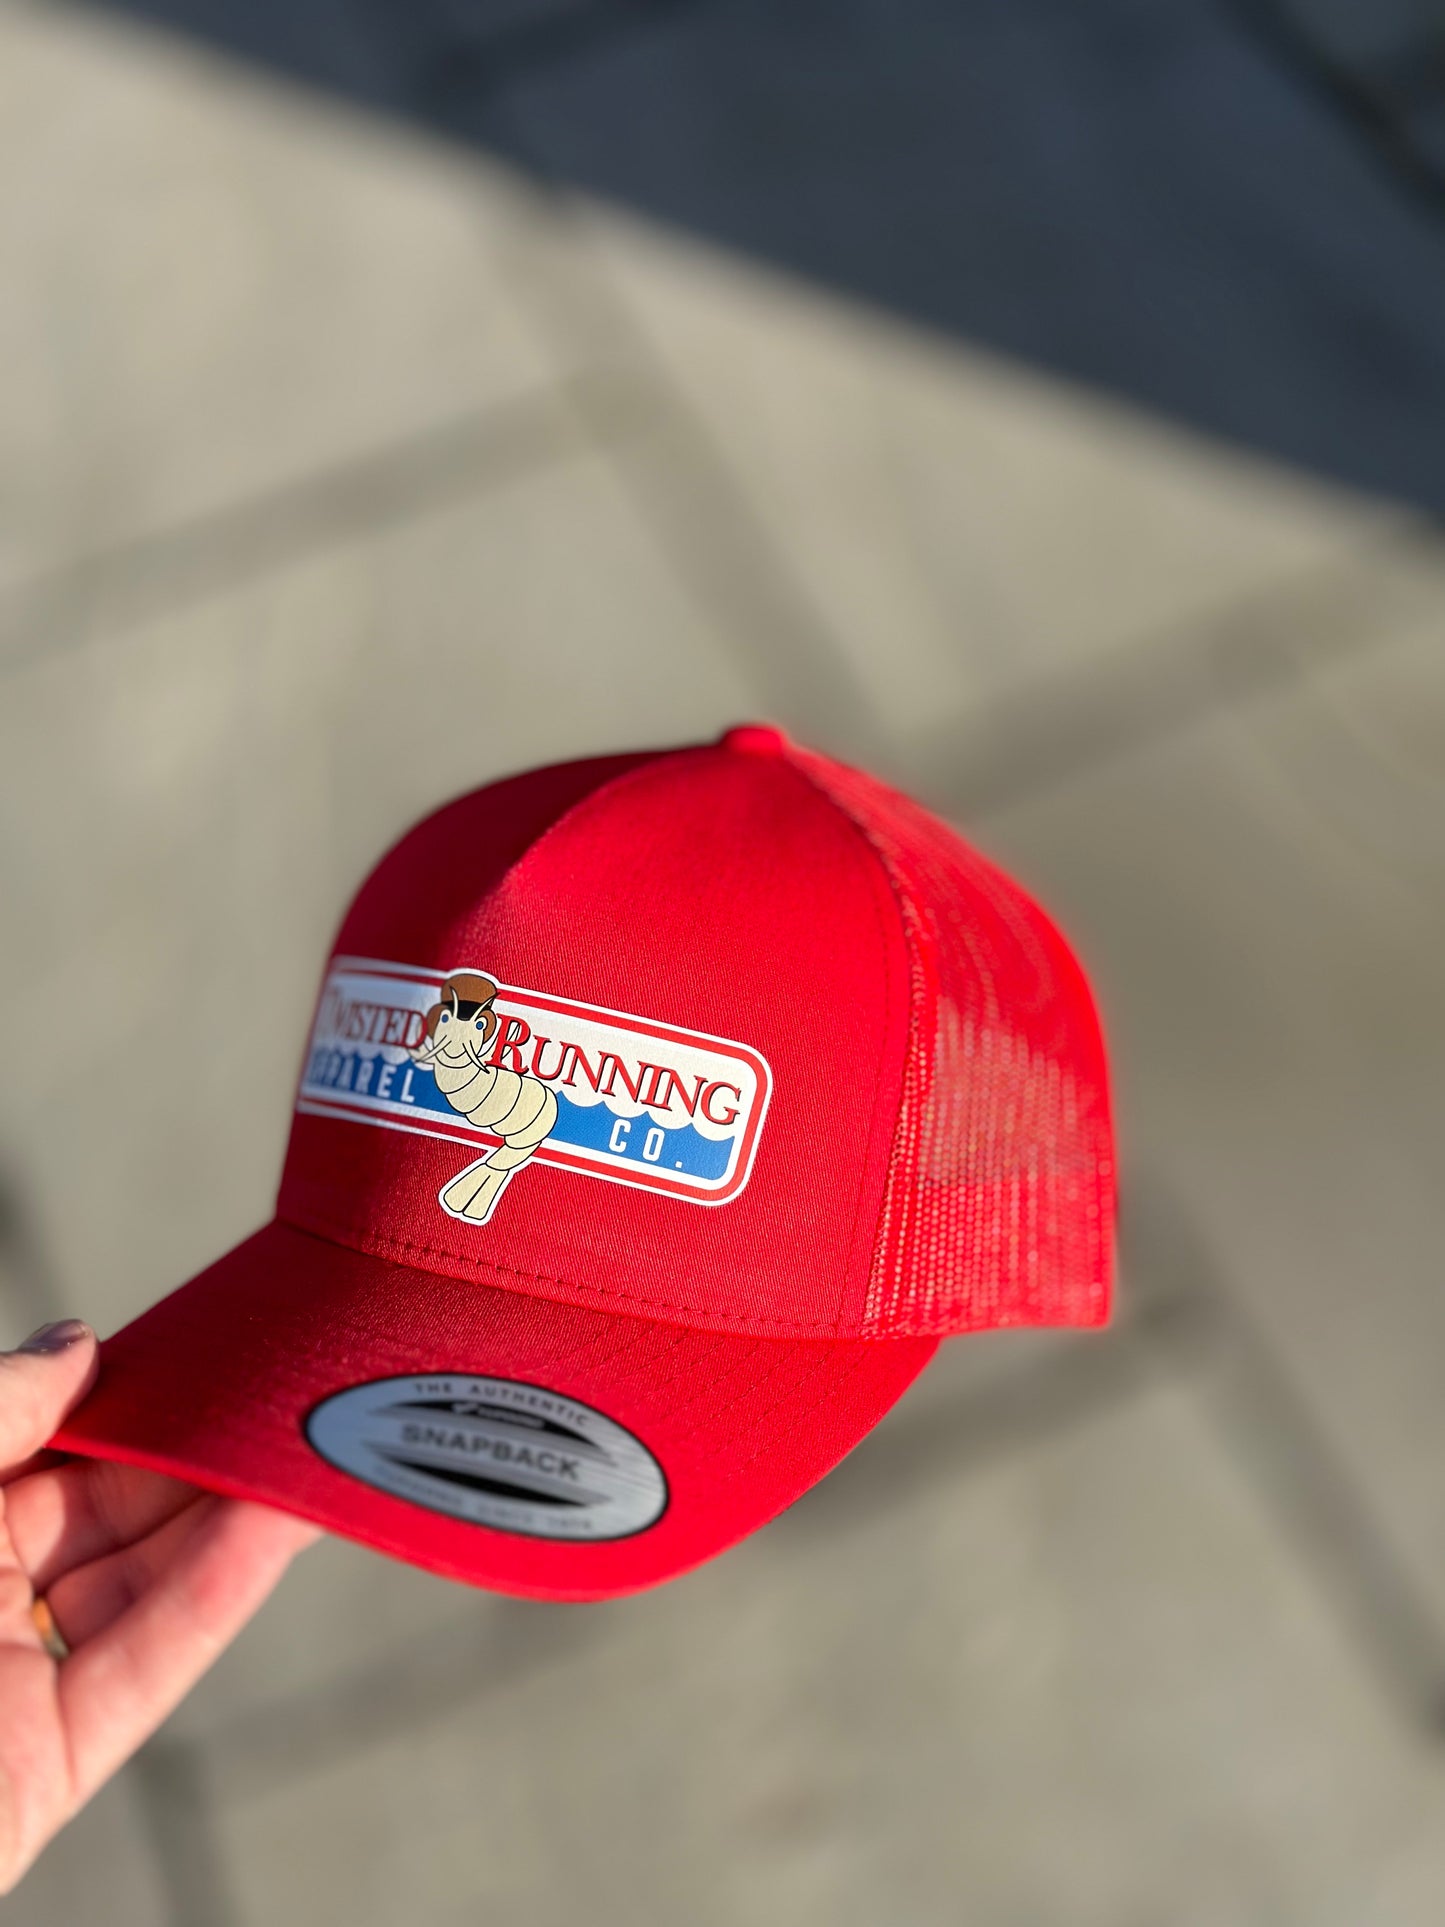 Twisted "Gump" Trucker Hat